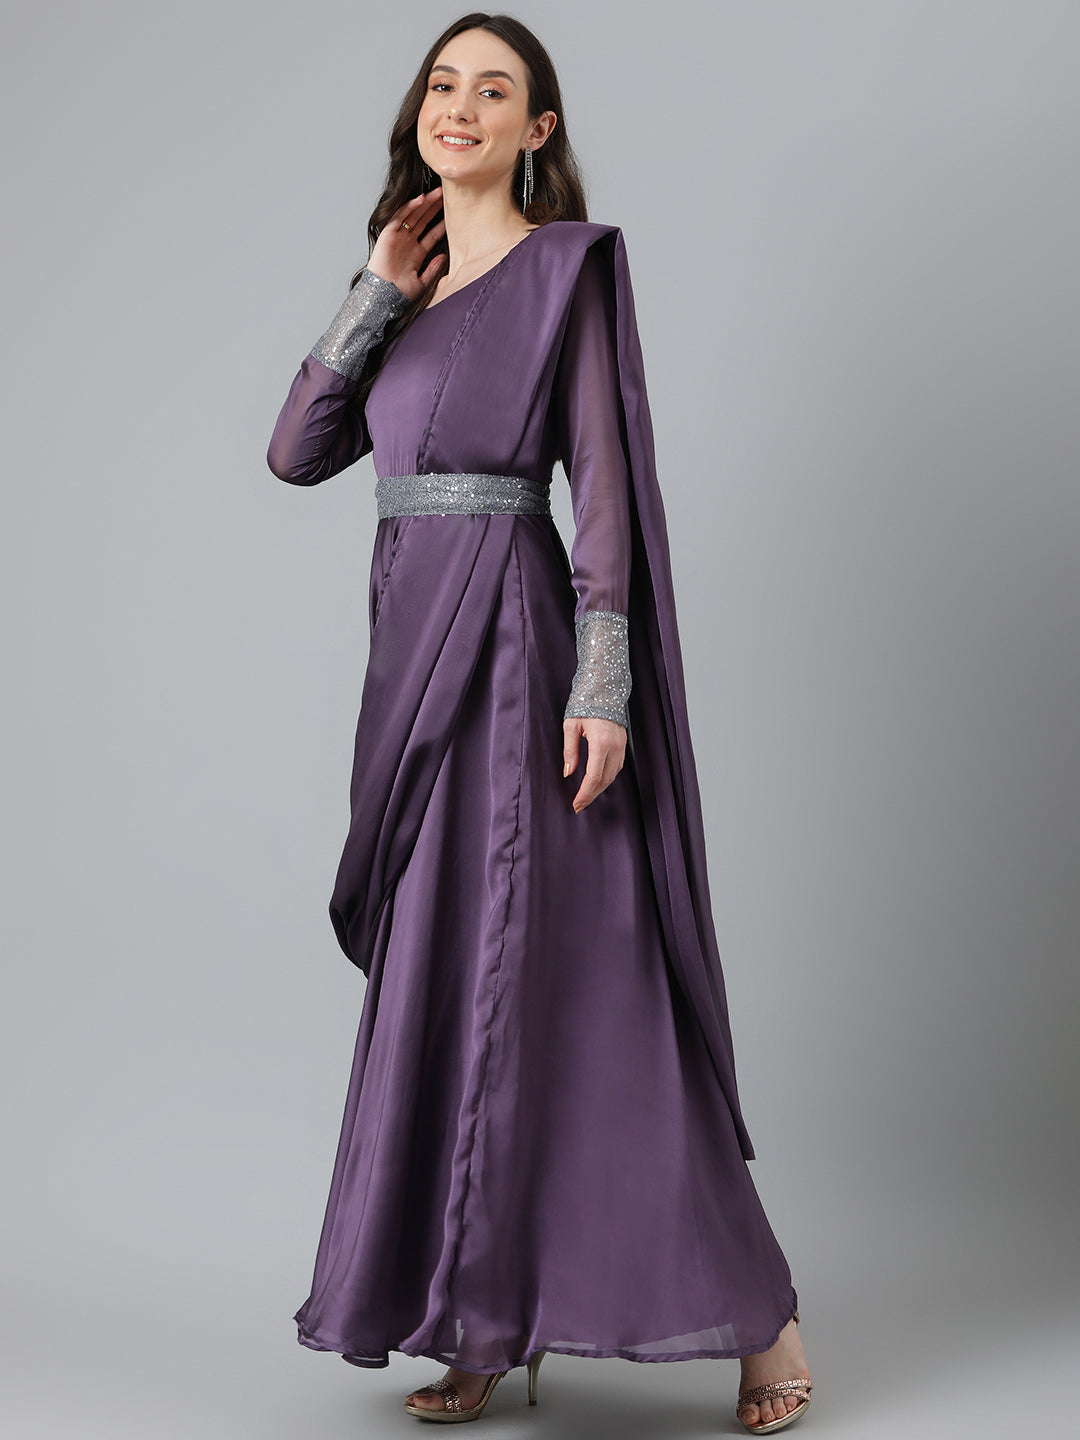 Lilac Drape Dress